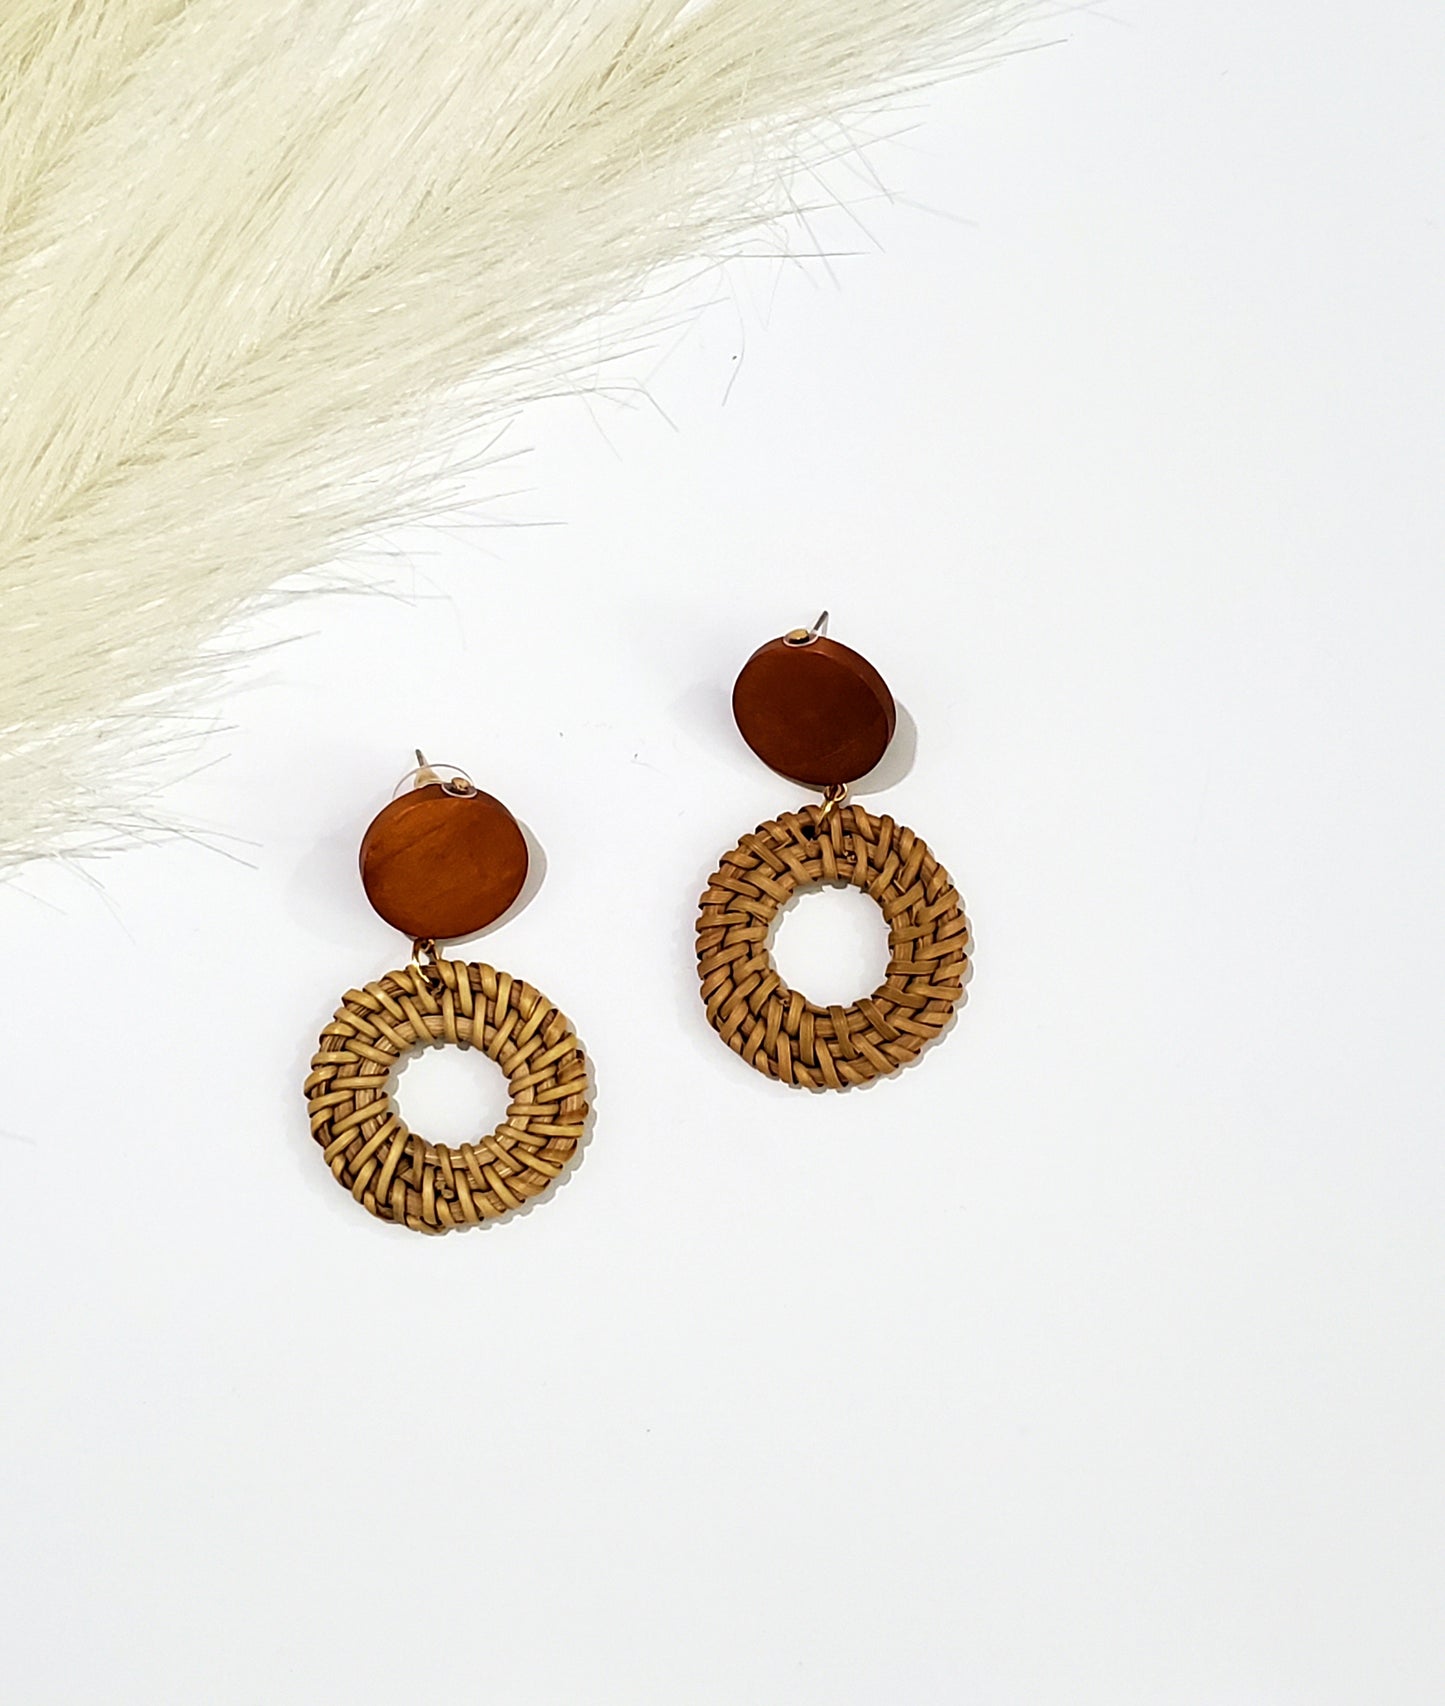 Natural woven rattan drop earrings